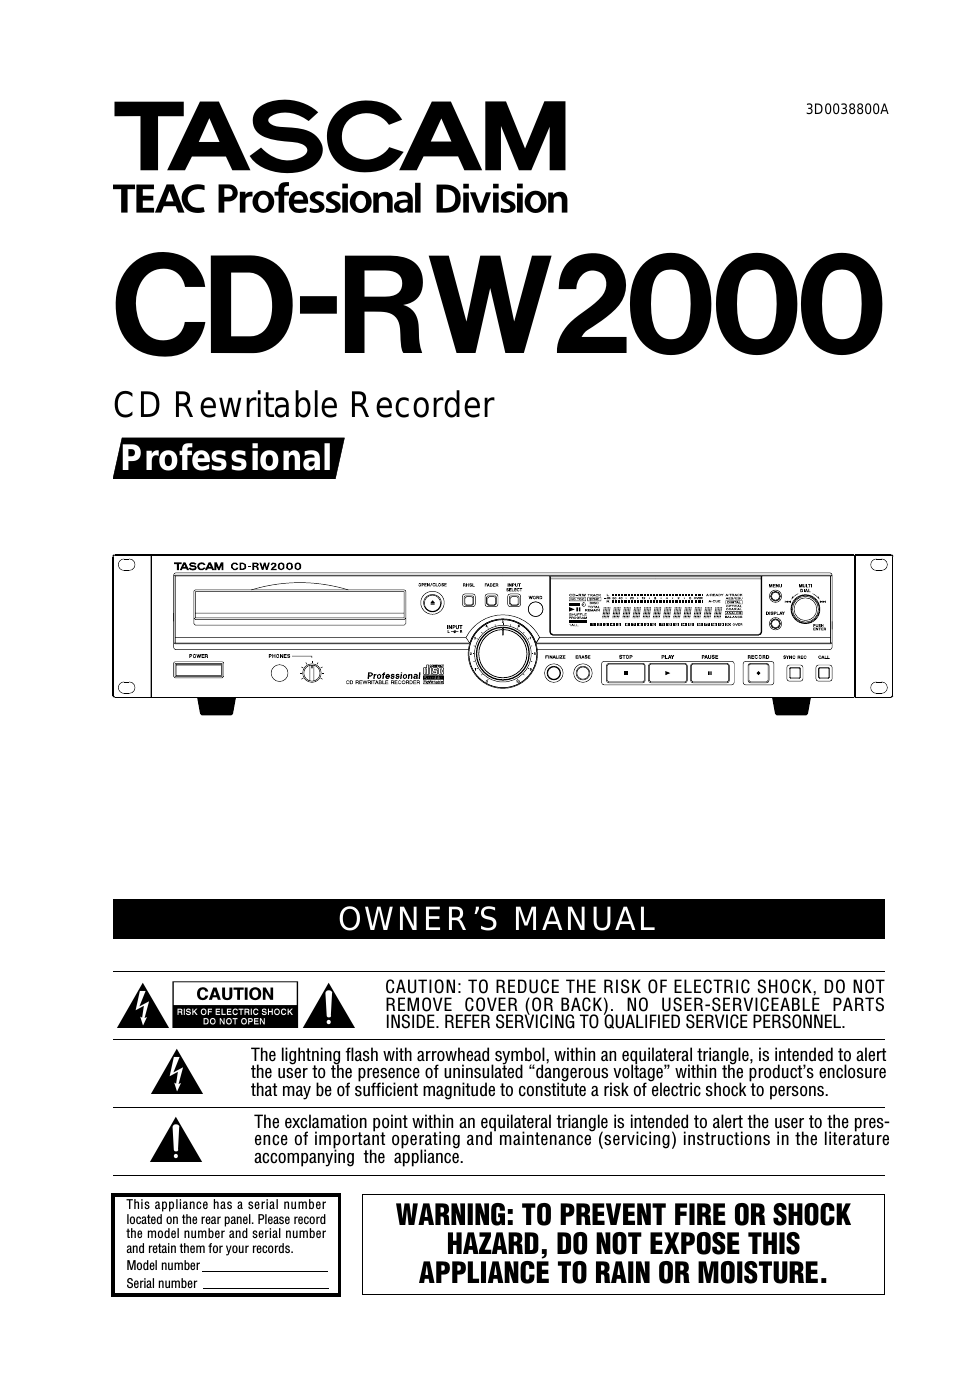 CD-RW2000